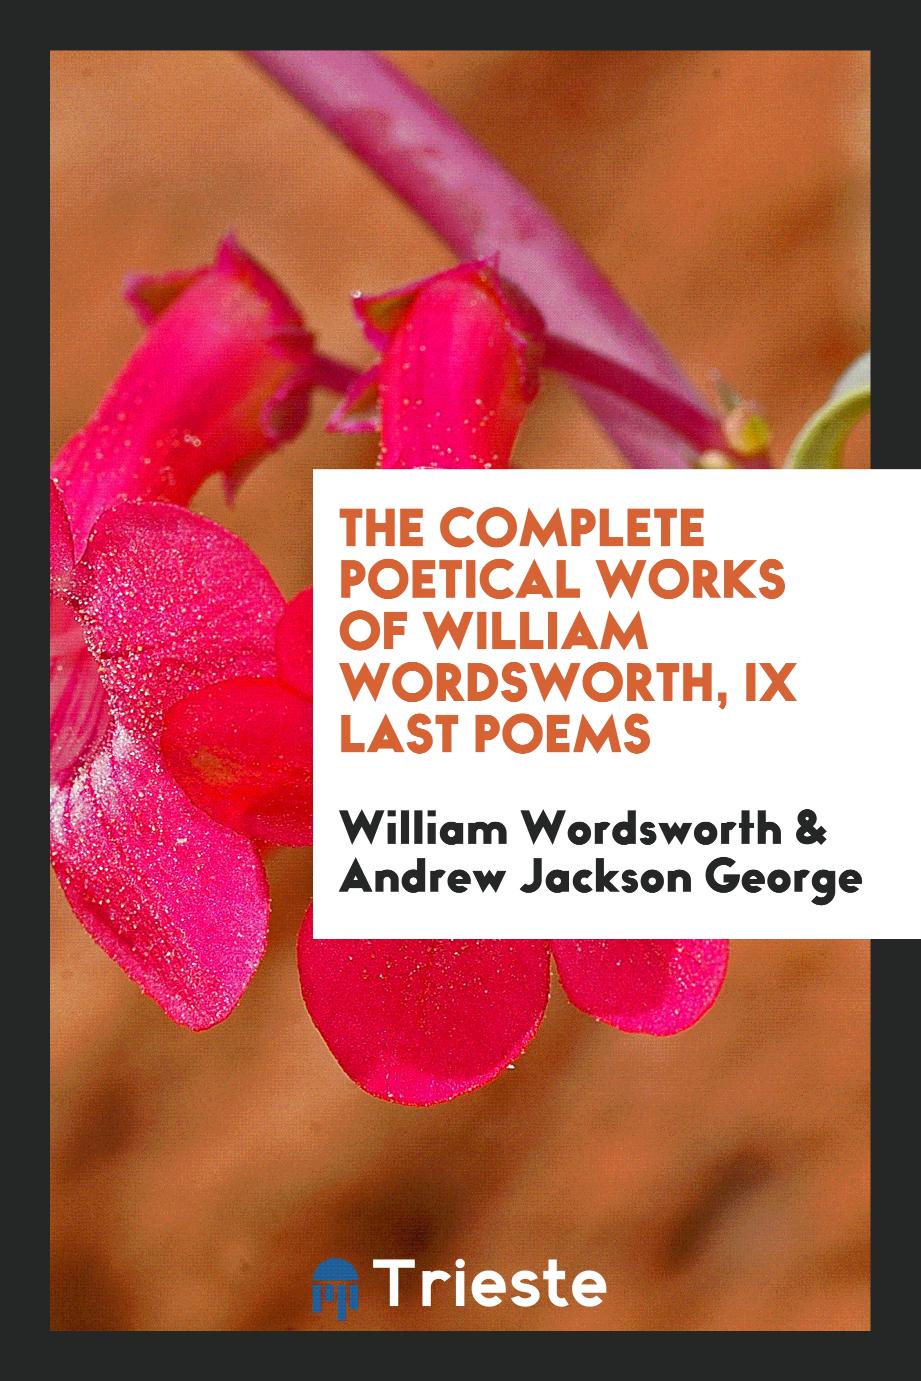 The complete poetical works of William Wordsworth, IX Last poems